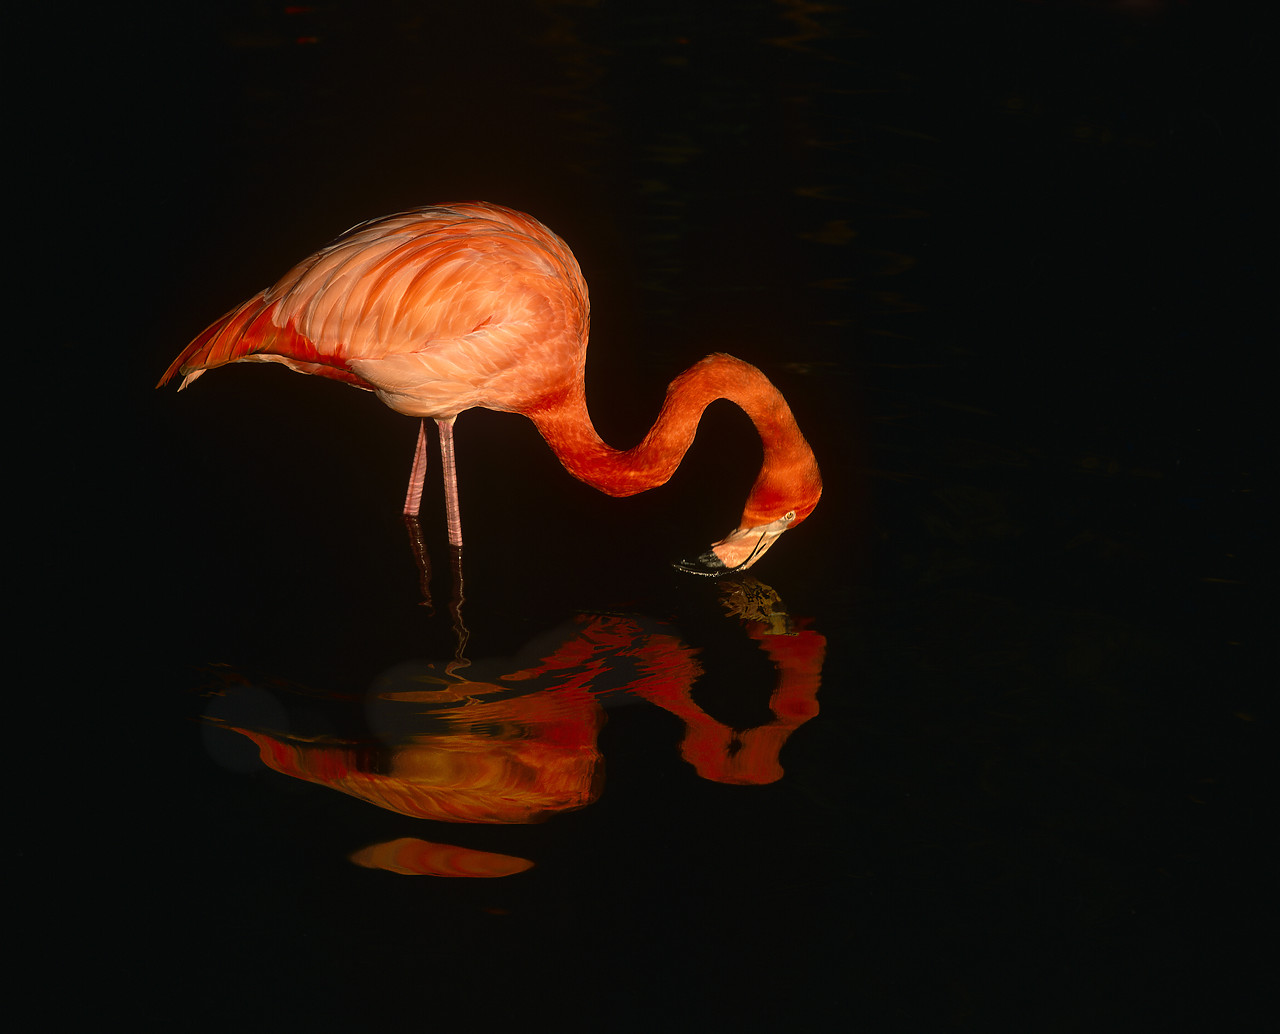 #010274-1 - Flamingo Reflecting in Water, Sarasota, Florida, USA